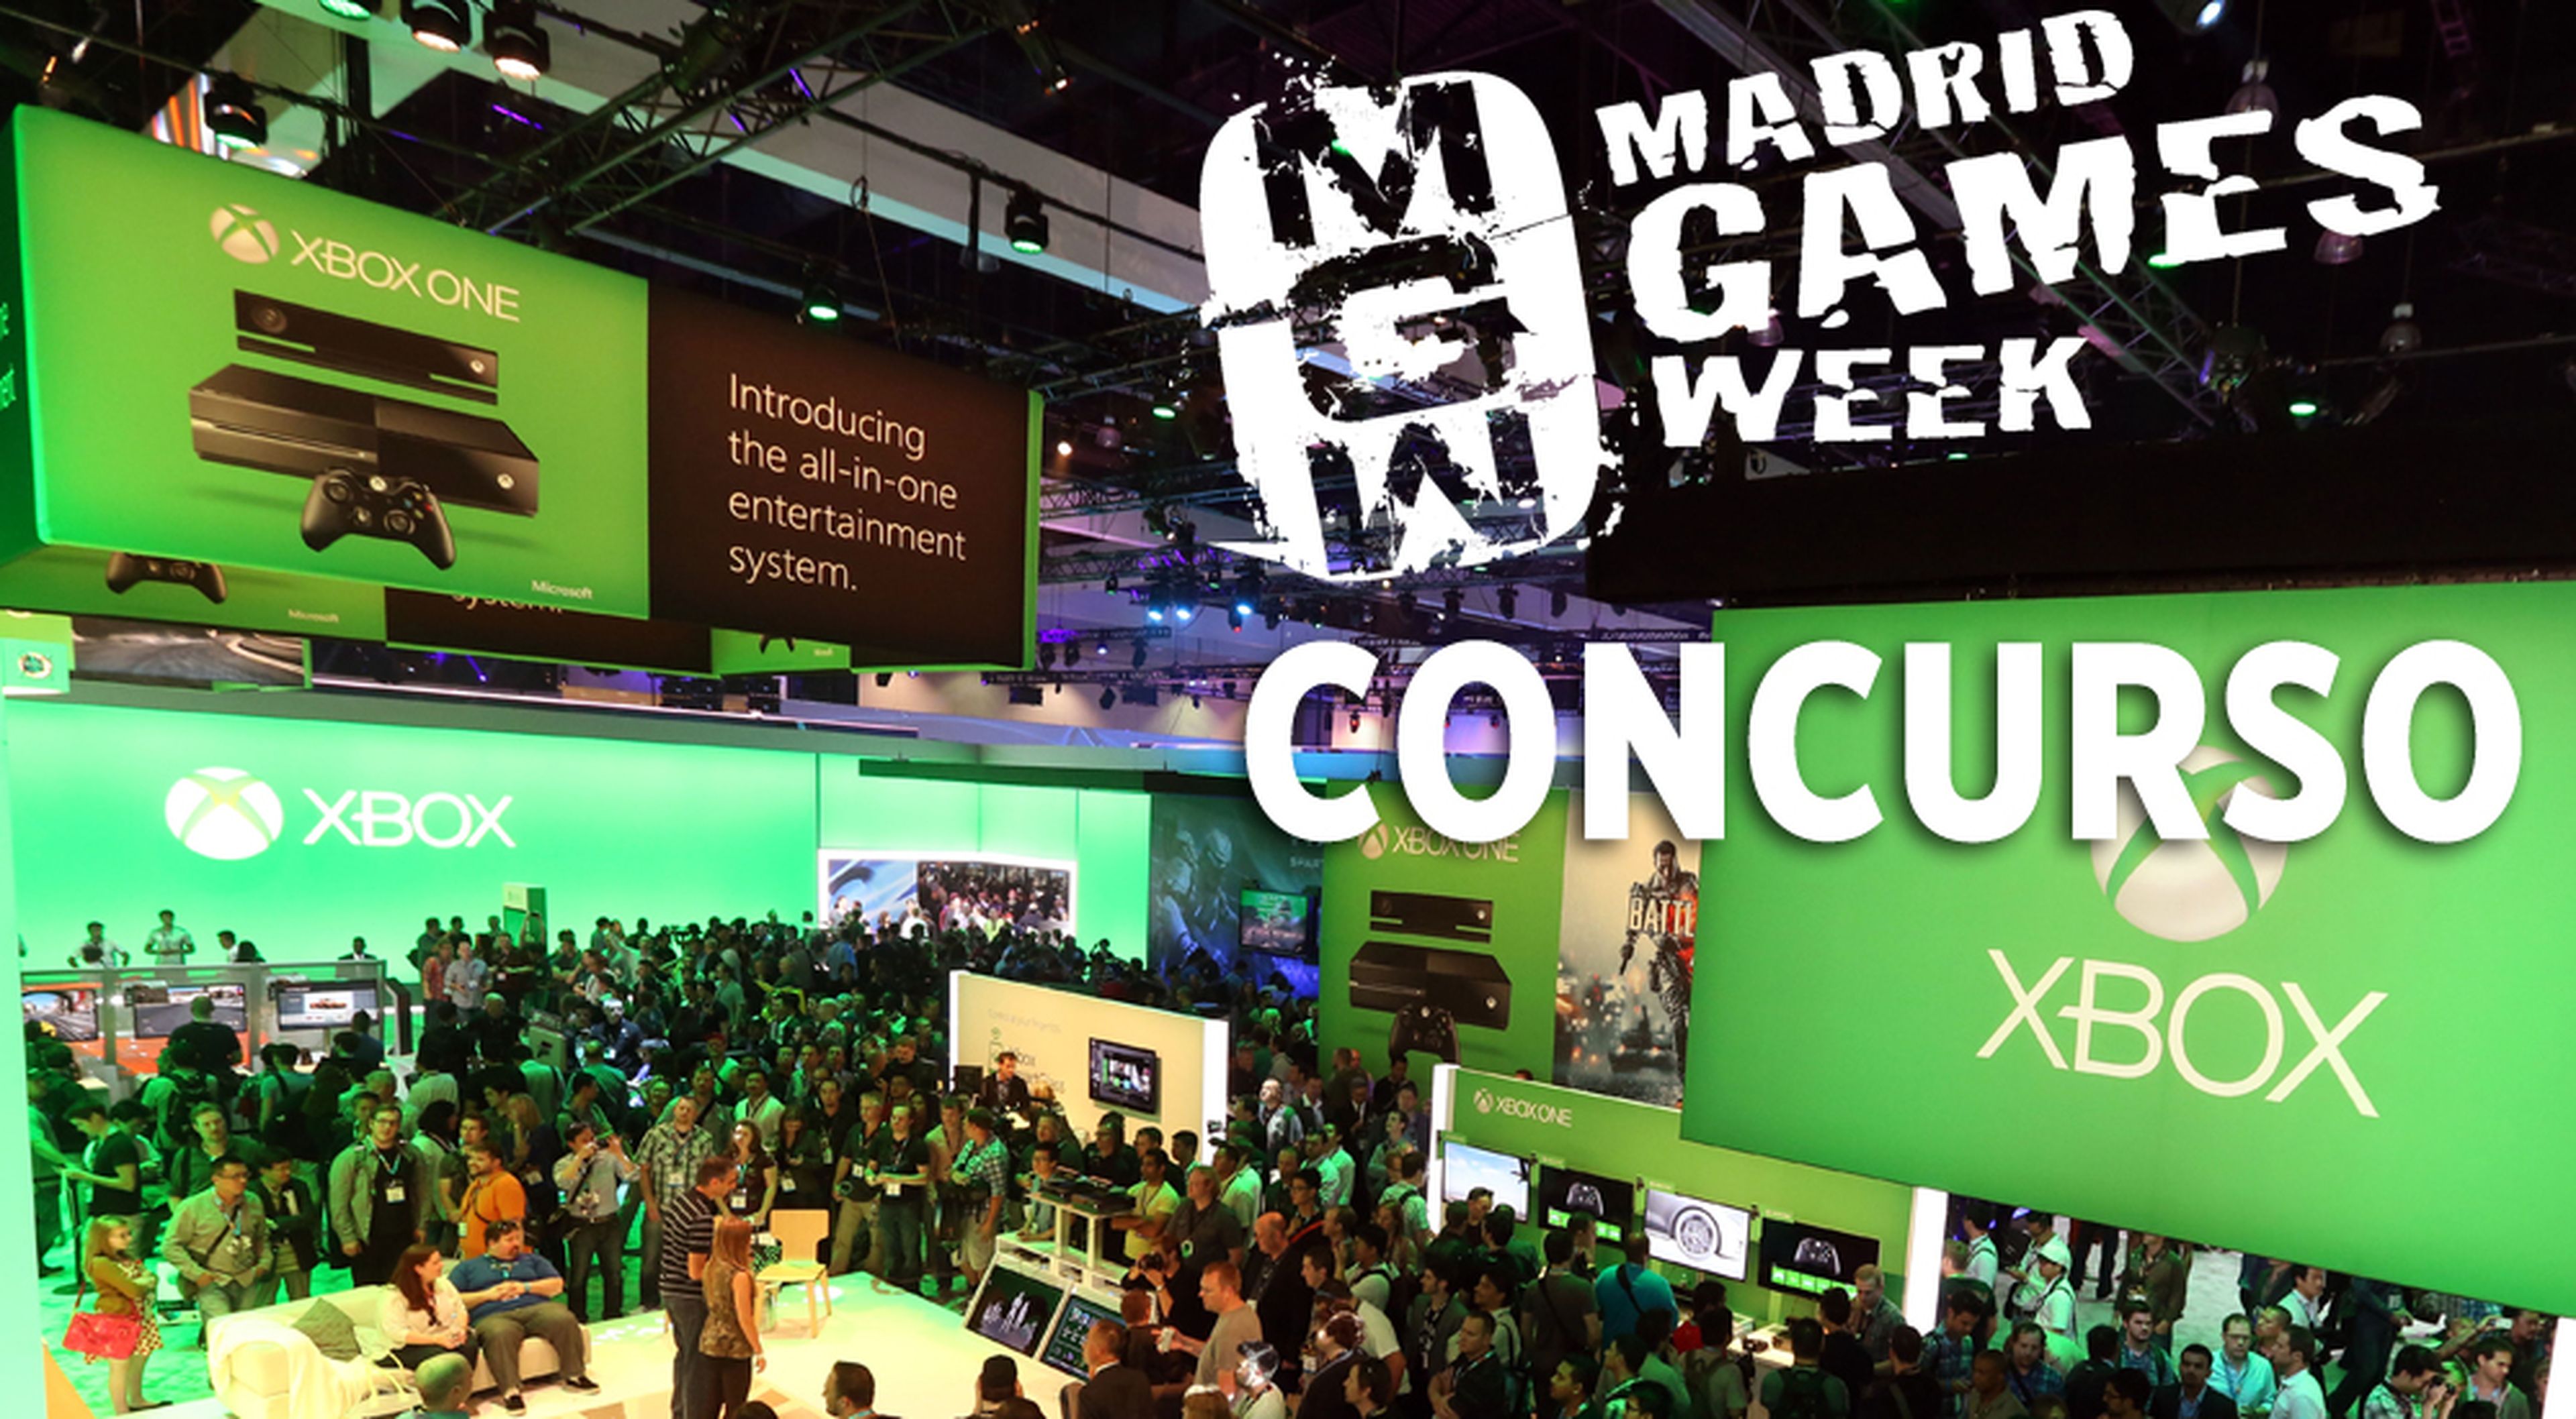 Concurso Xbox One en Madrid Games Week